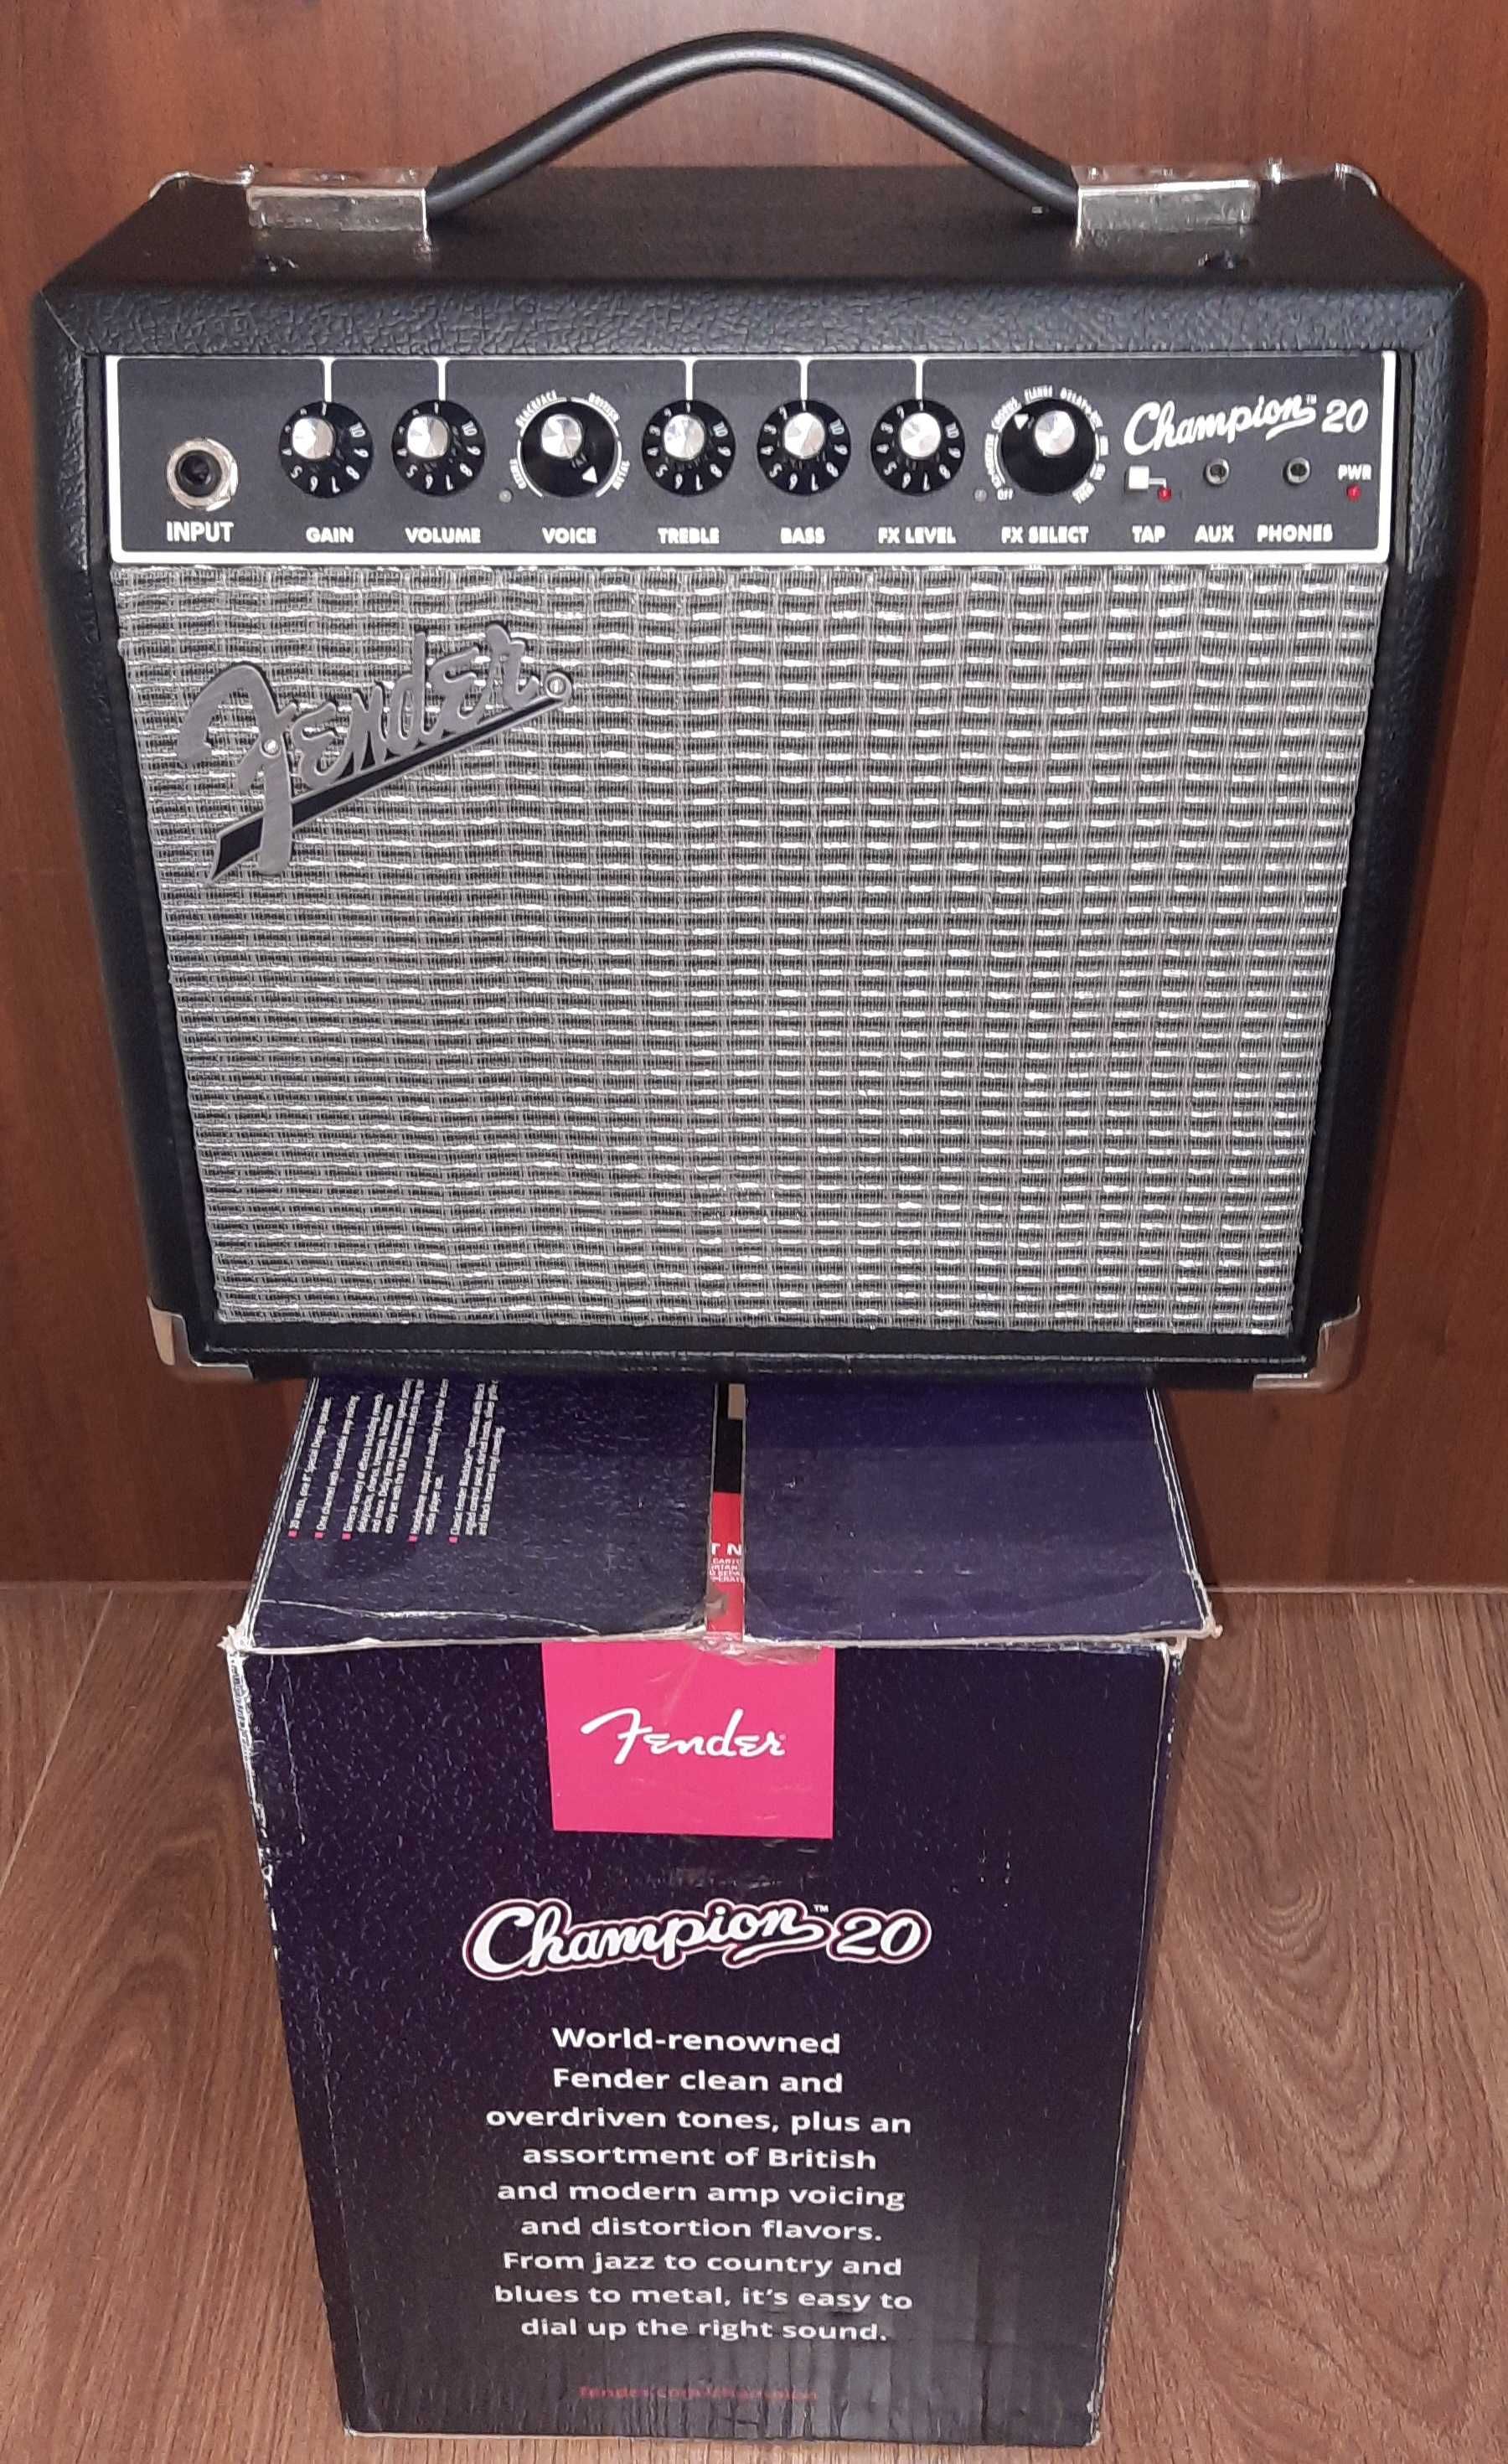 Chitara electrica Epiphone Les Paul Special II Amplificator Fender C20